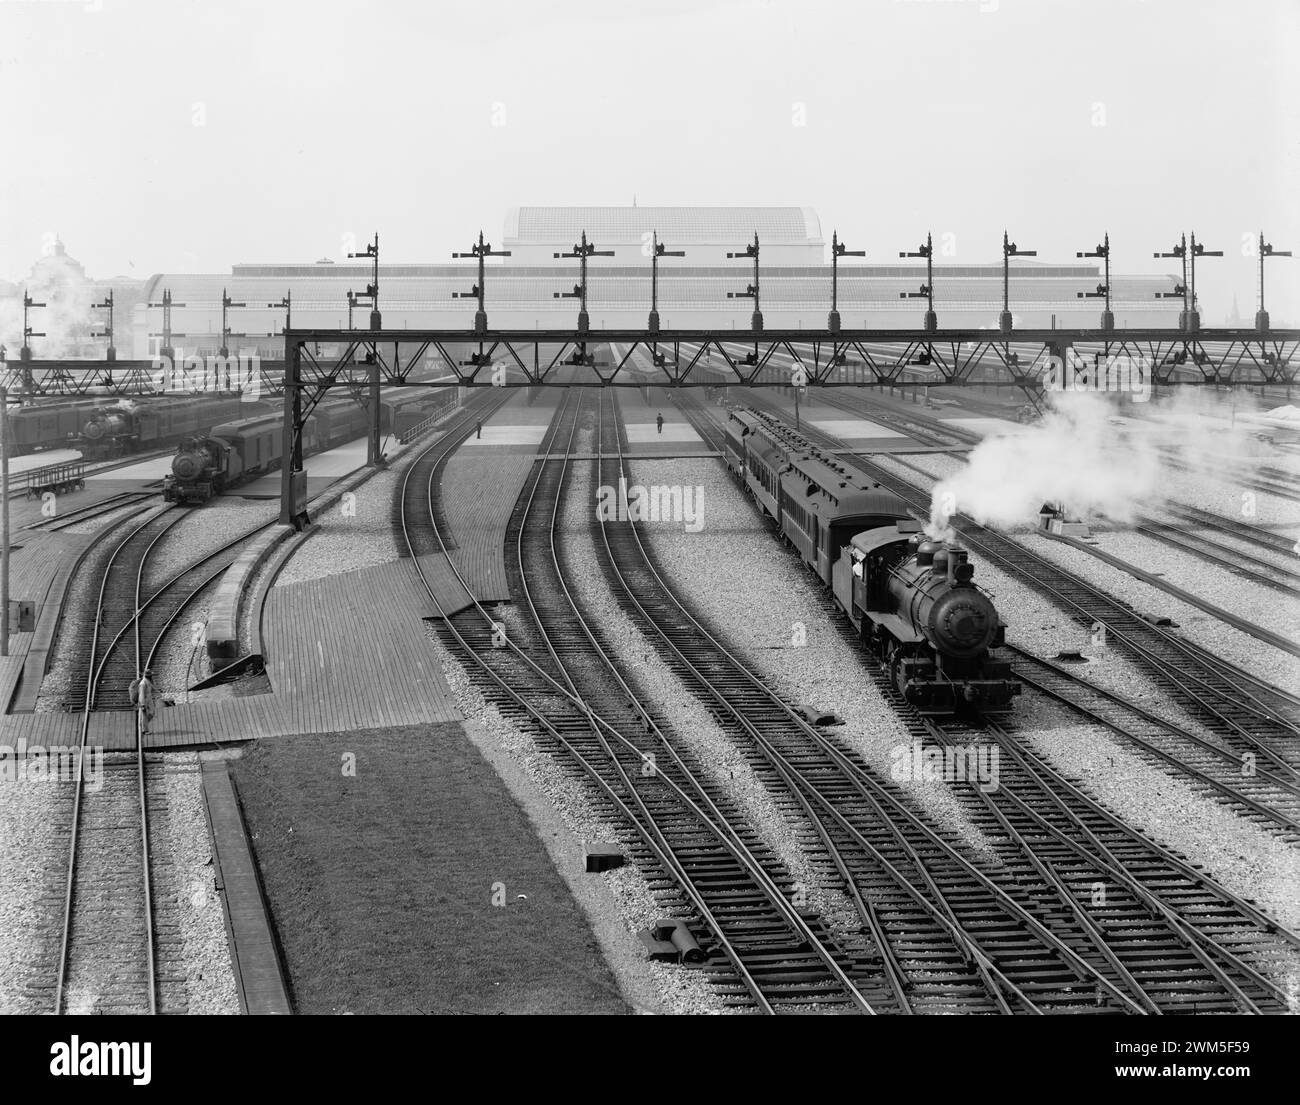 Railroad yard  - Steam locomotive on its way. Vintage train photo - Switch yards, Union Station, Washington, D.C. - locomotive, steam train - Detroit Publ. Co ca 1908 Stock Photo